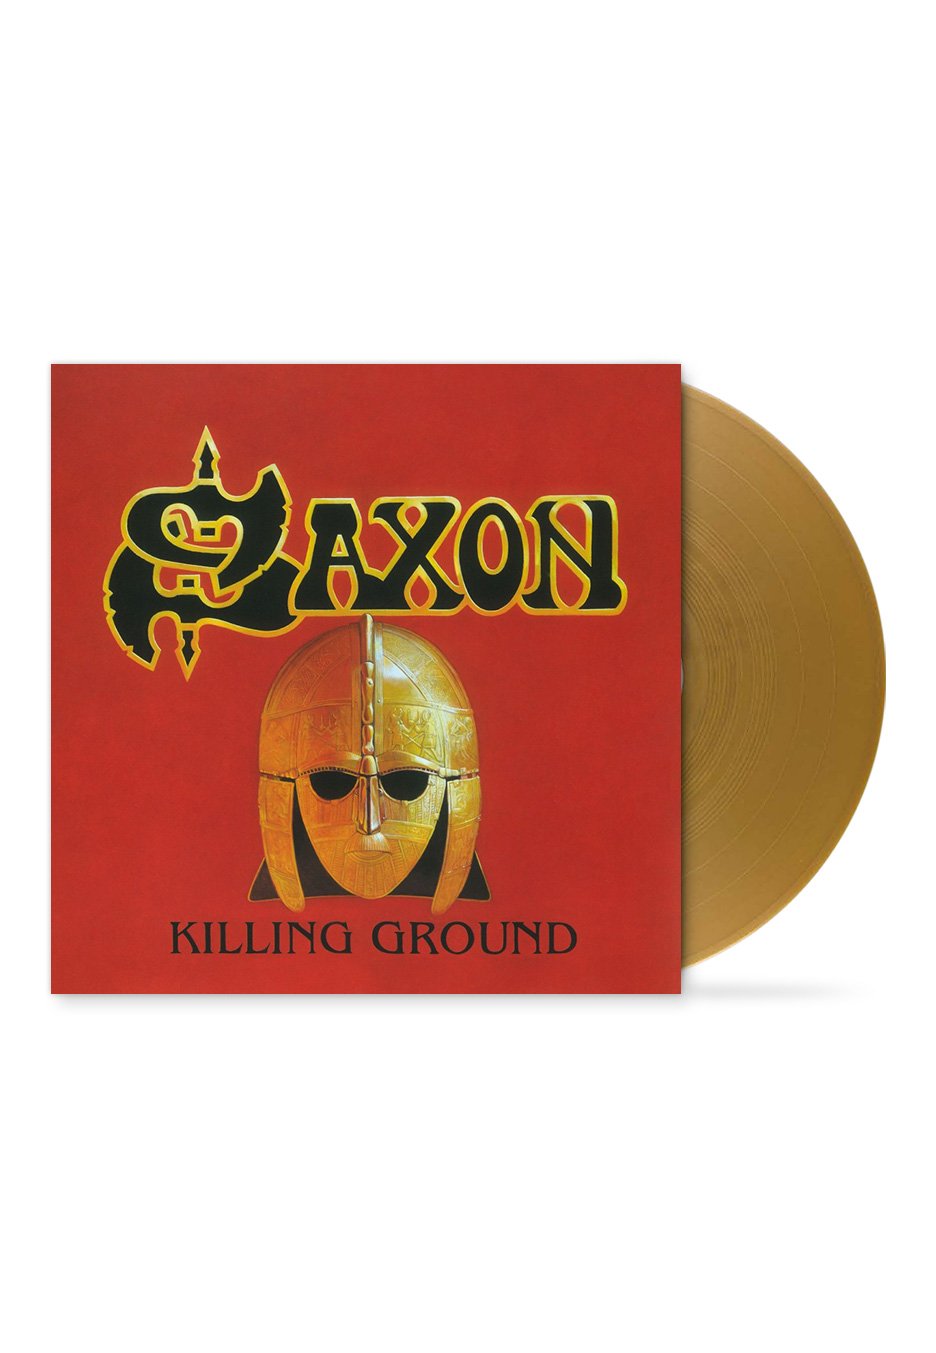 Saxon - Killing Ground Gold Ltd. - Colored Vinyl